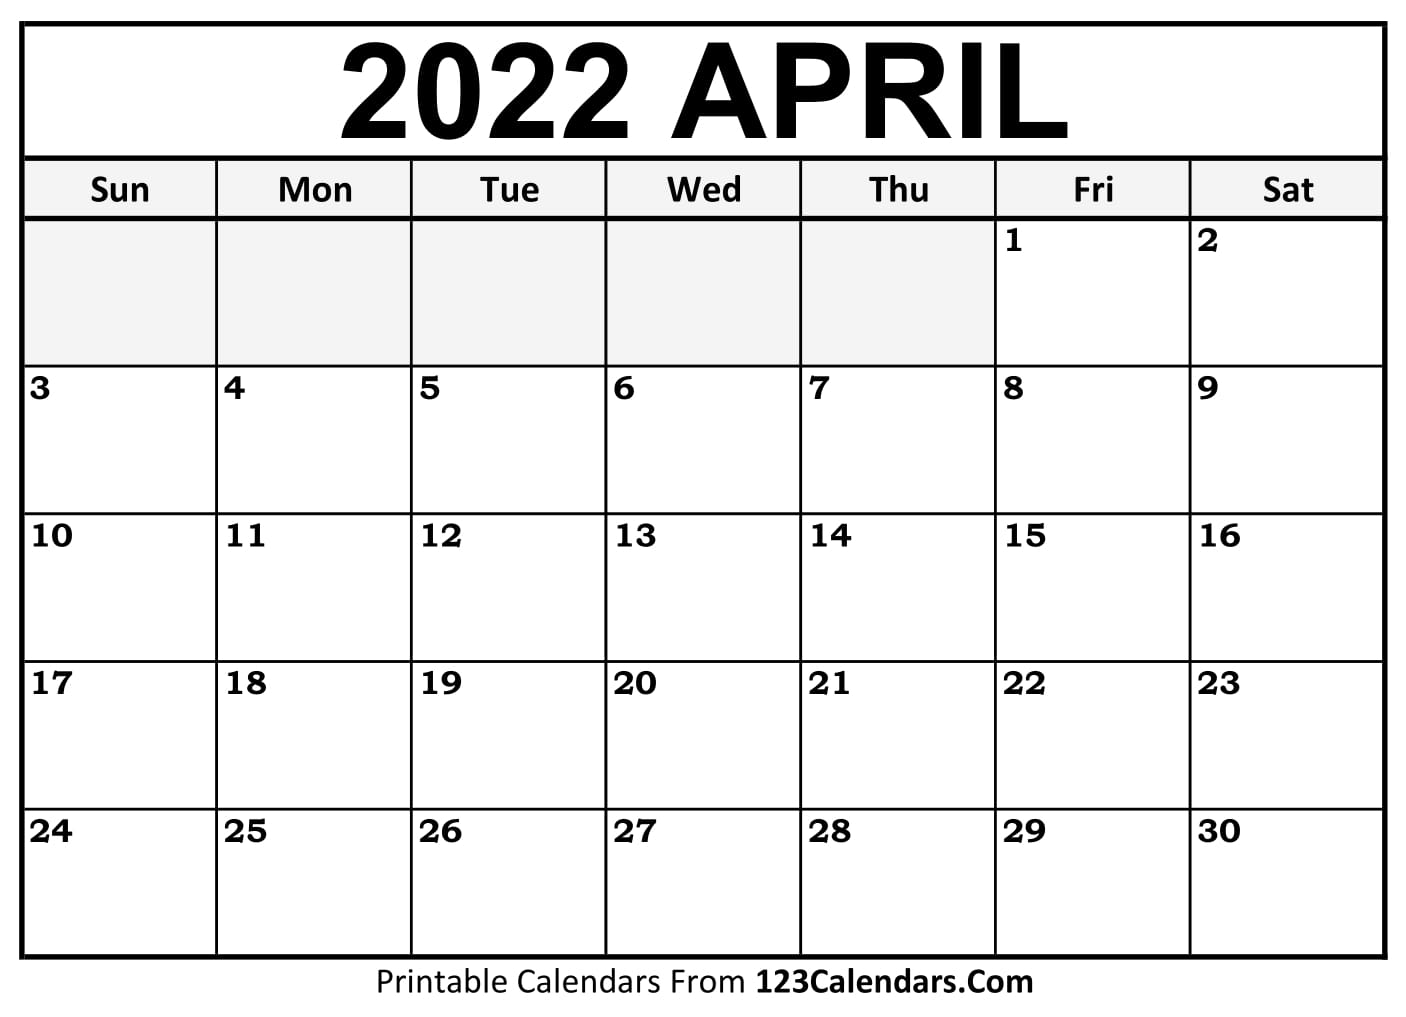 2022 April Calendar